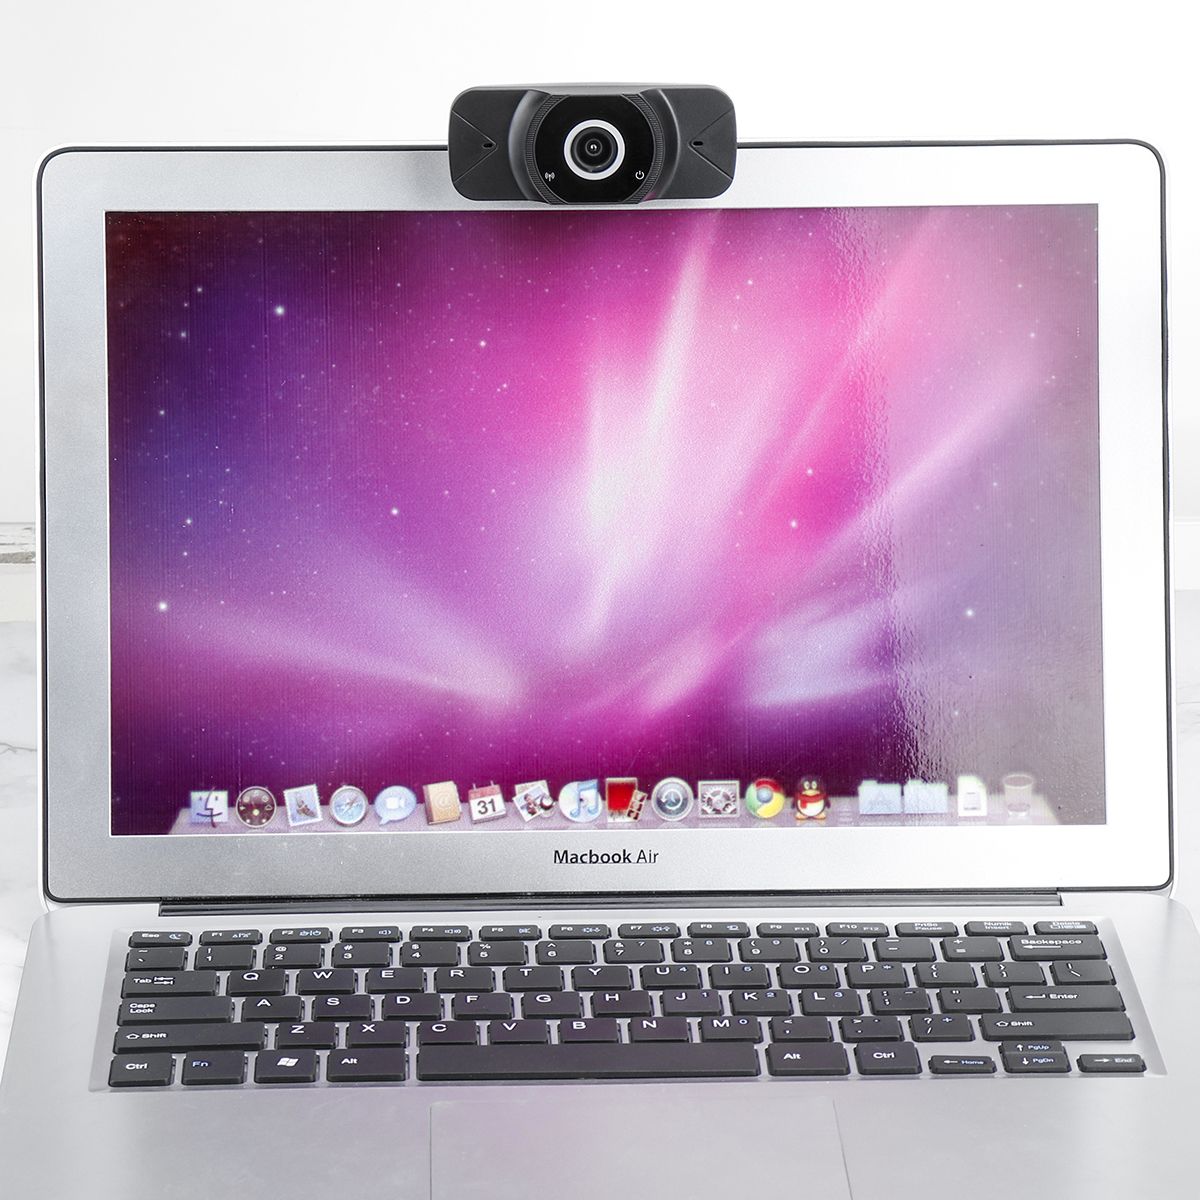 USB-20-Webcam-Auto-Focusing-Web-Camera-Cam-with-Microphone-For-Laptop-Desktop-1695519